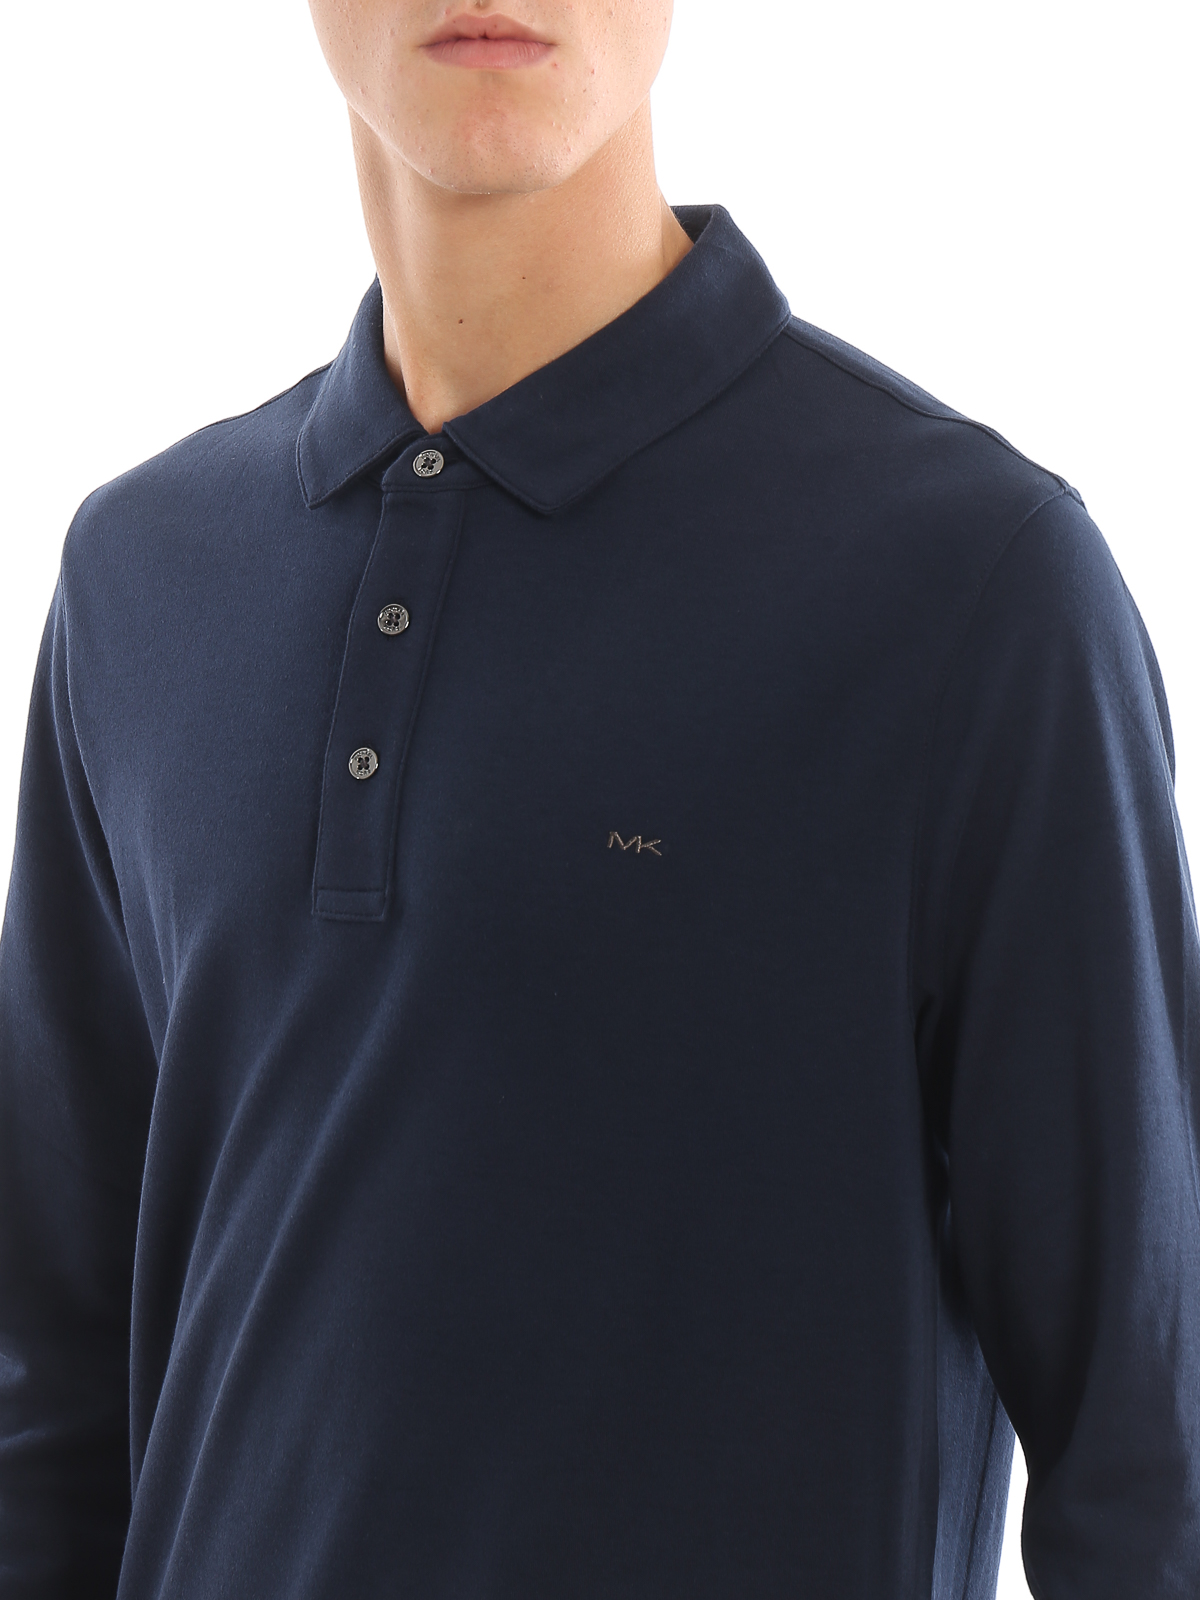 Blue jersey long sleeve polo shirt 